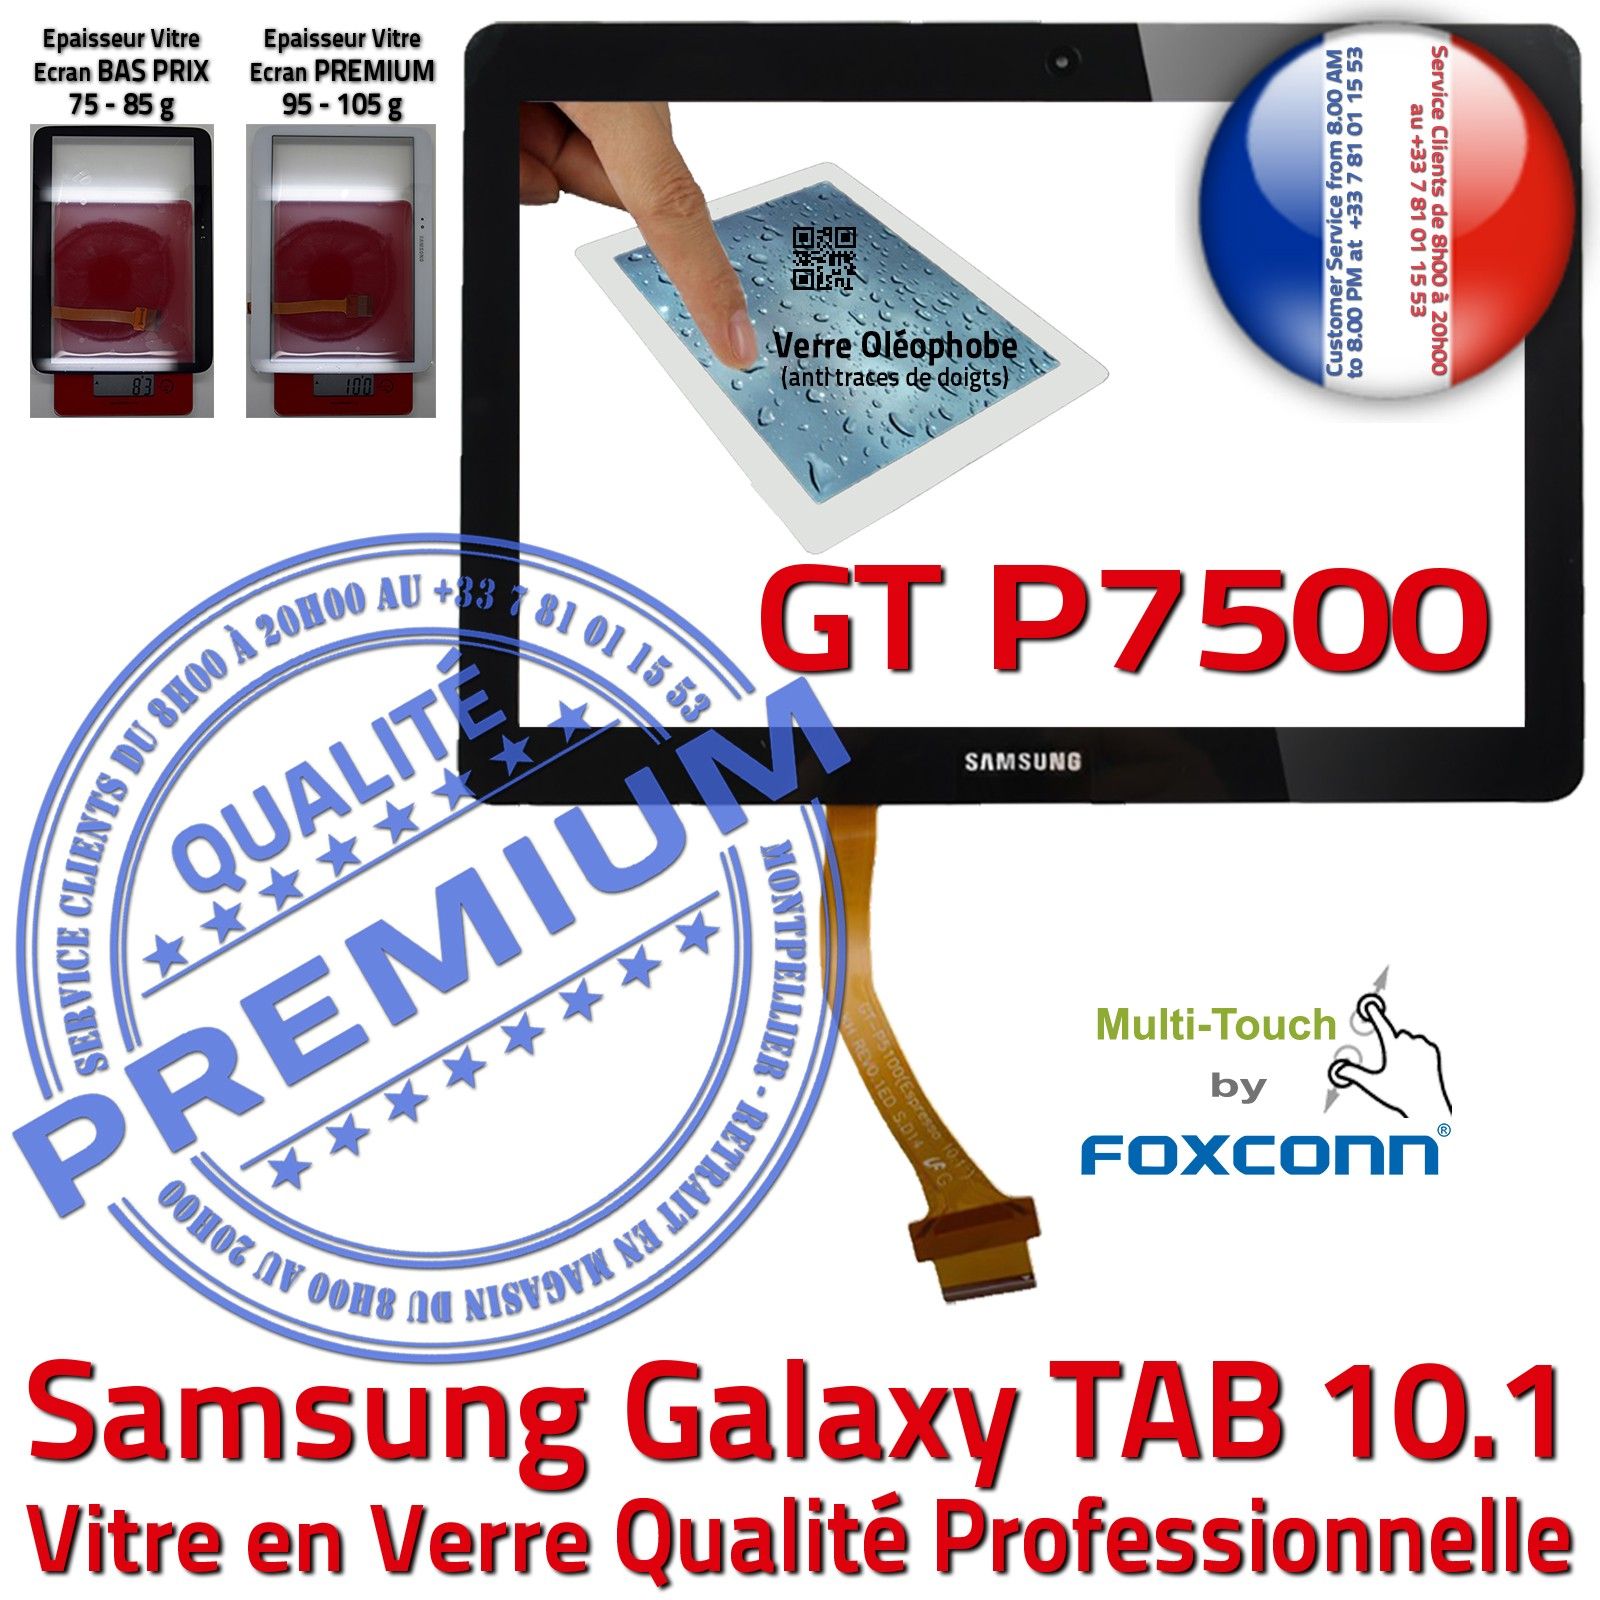 Chargeur pour Tablette Samsung Gt-p7510 galaxy tab 10.1 galaxy tab